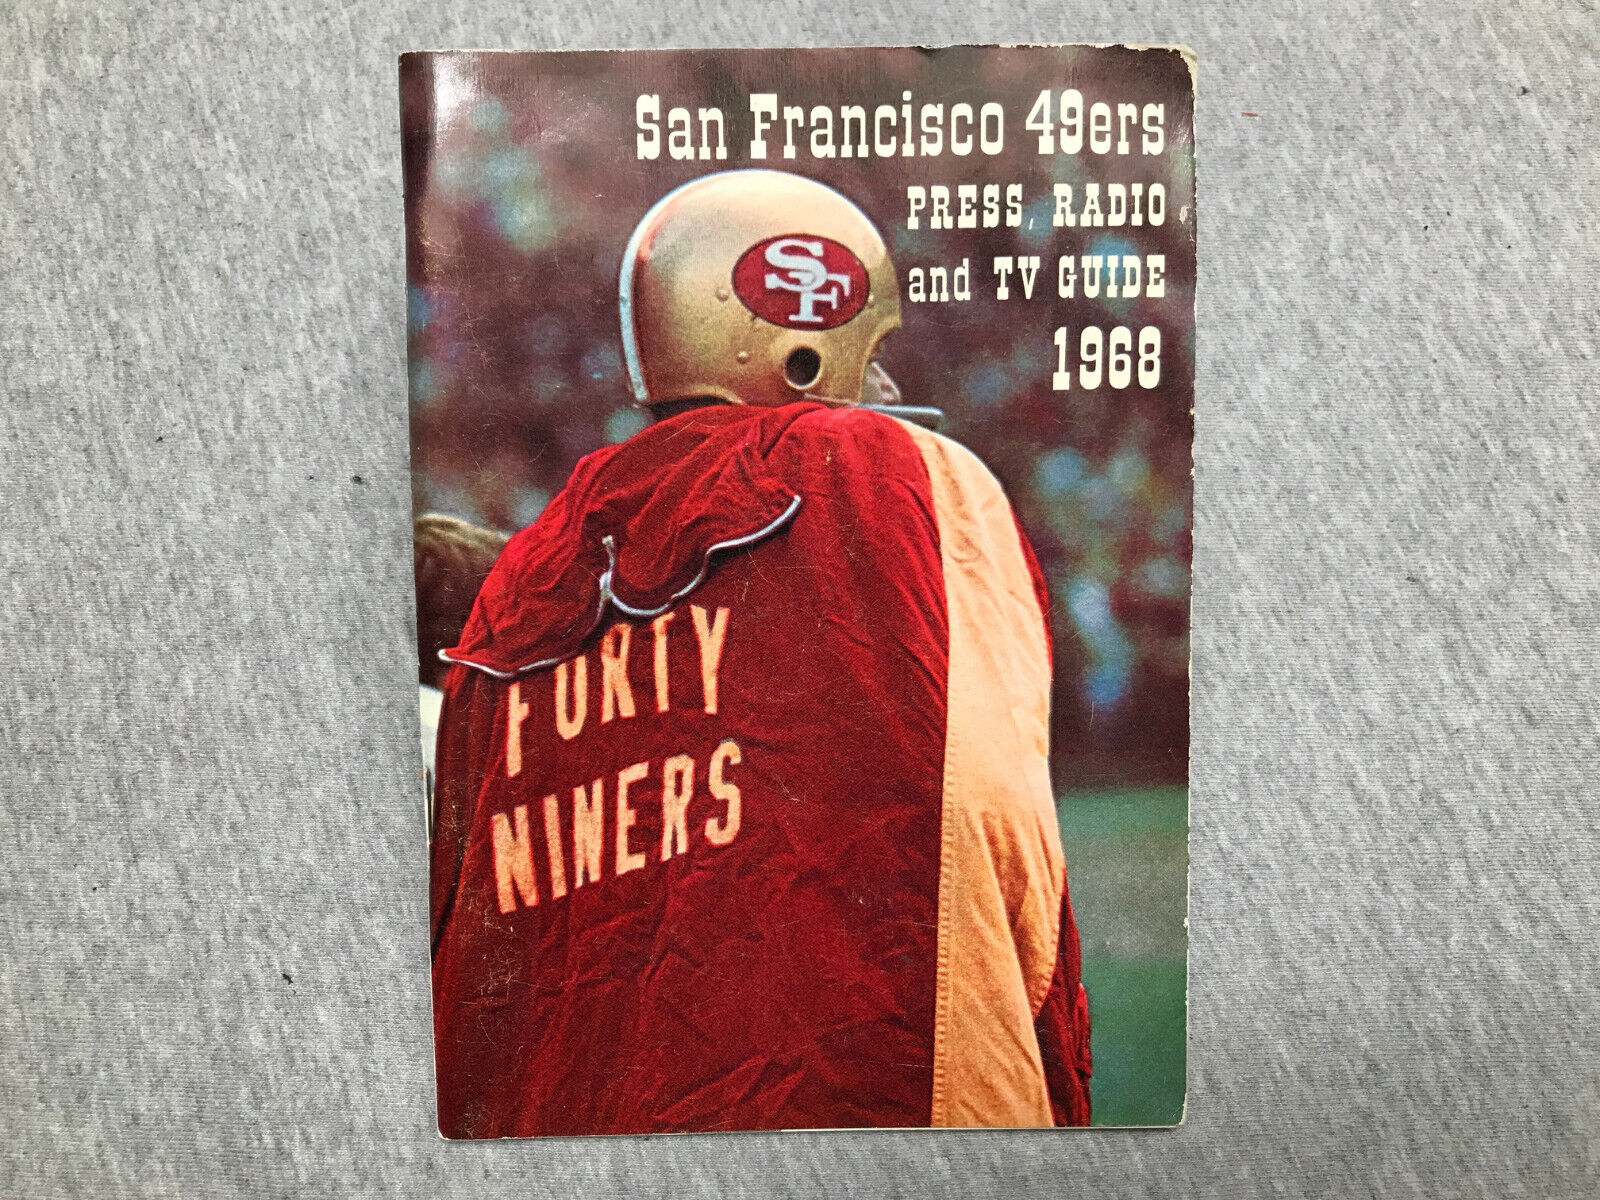 Vintage 1968 San Francisco 49ers Press, Radio and TV Guide, NFL Football